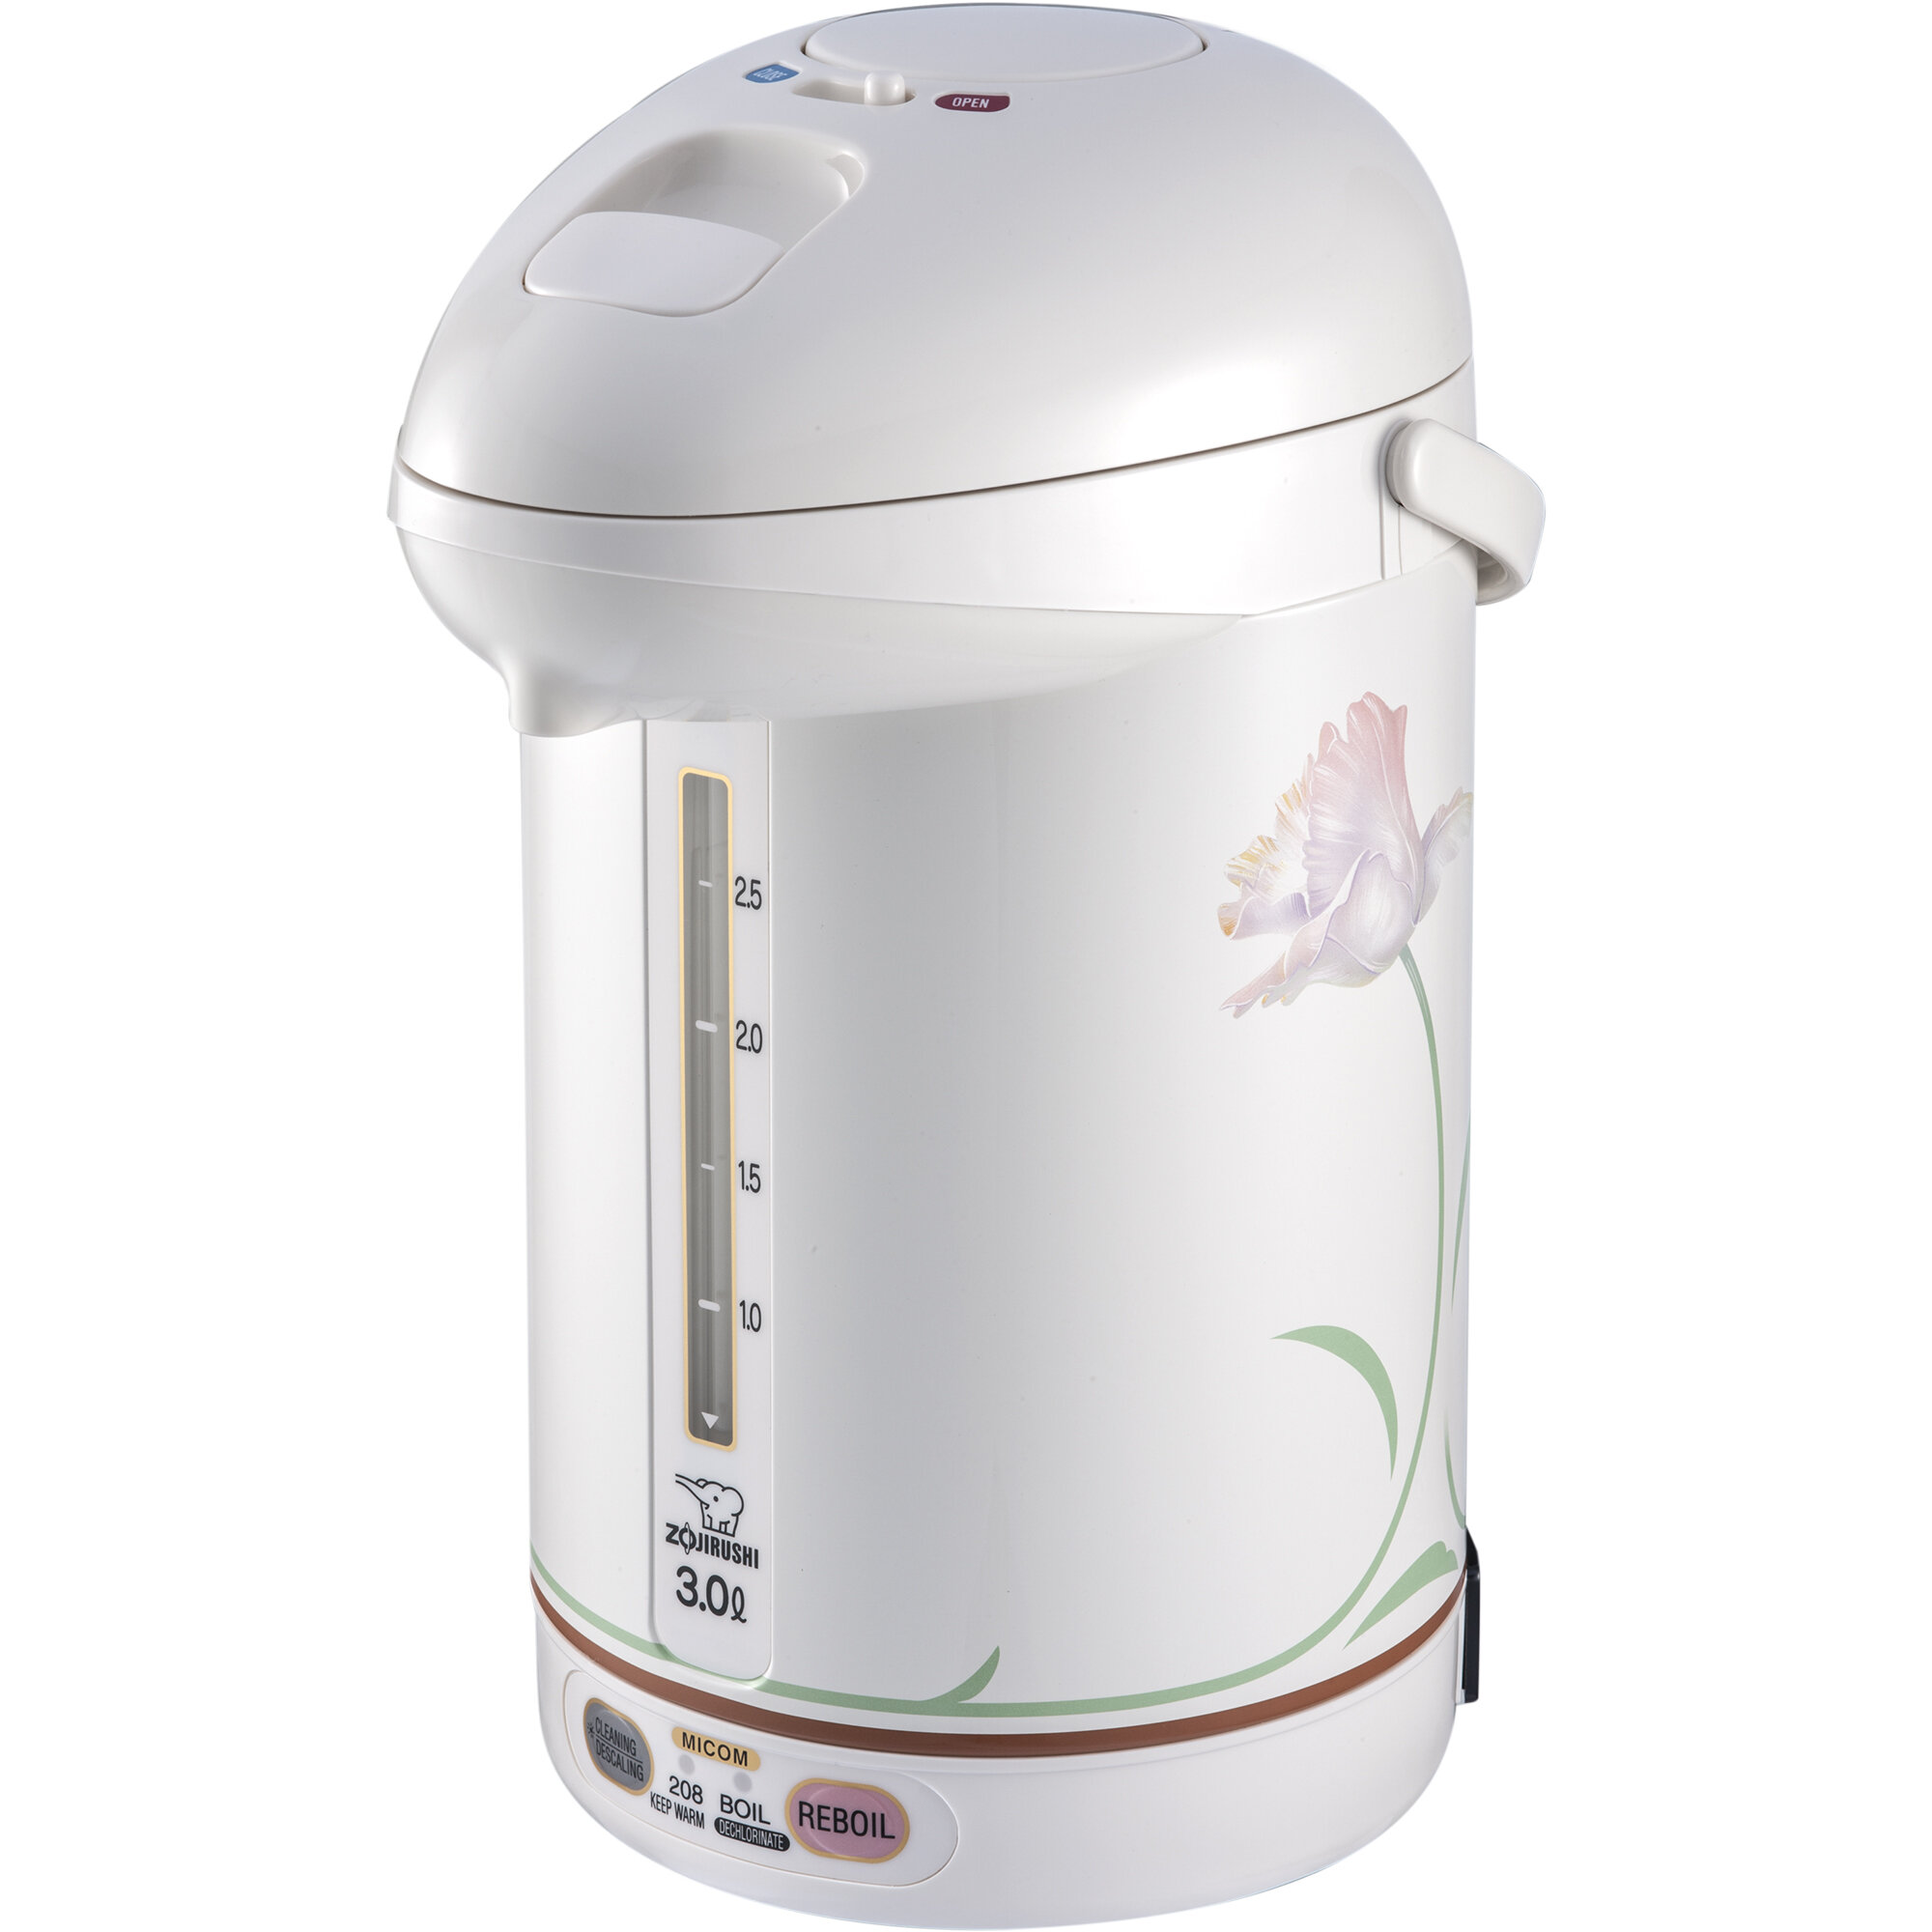  Zojirushi Hot Water Dispenser